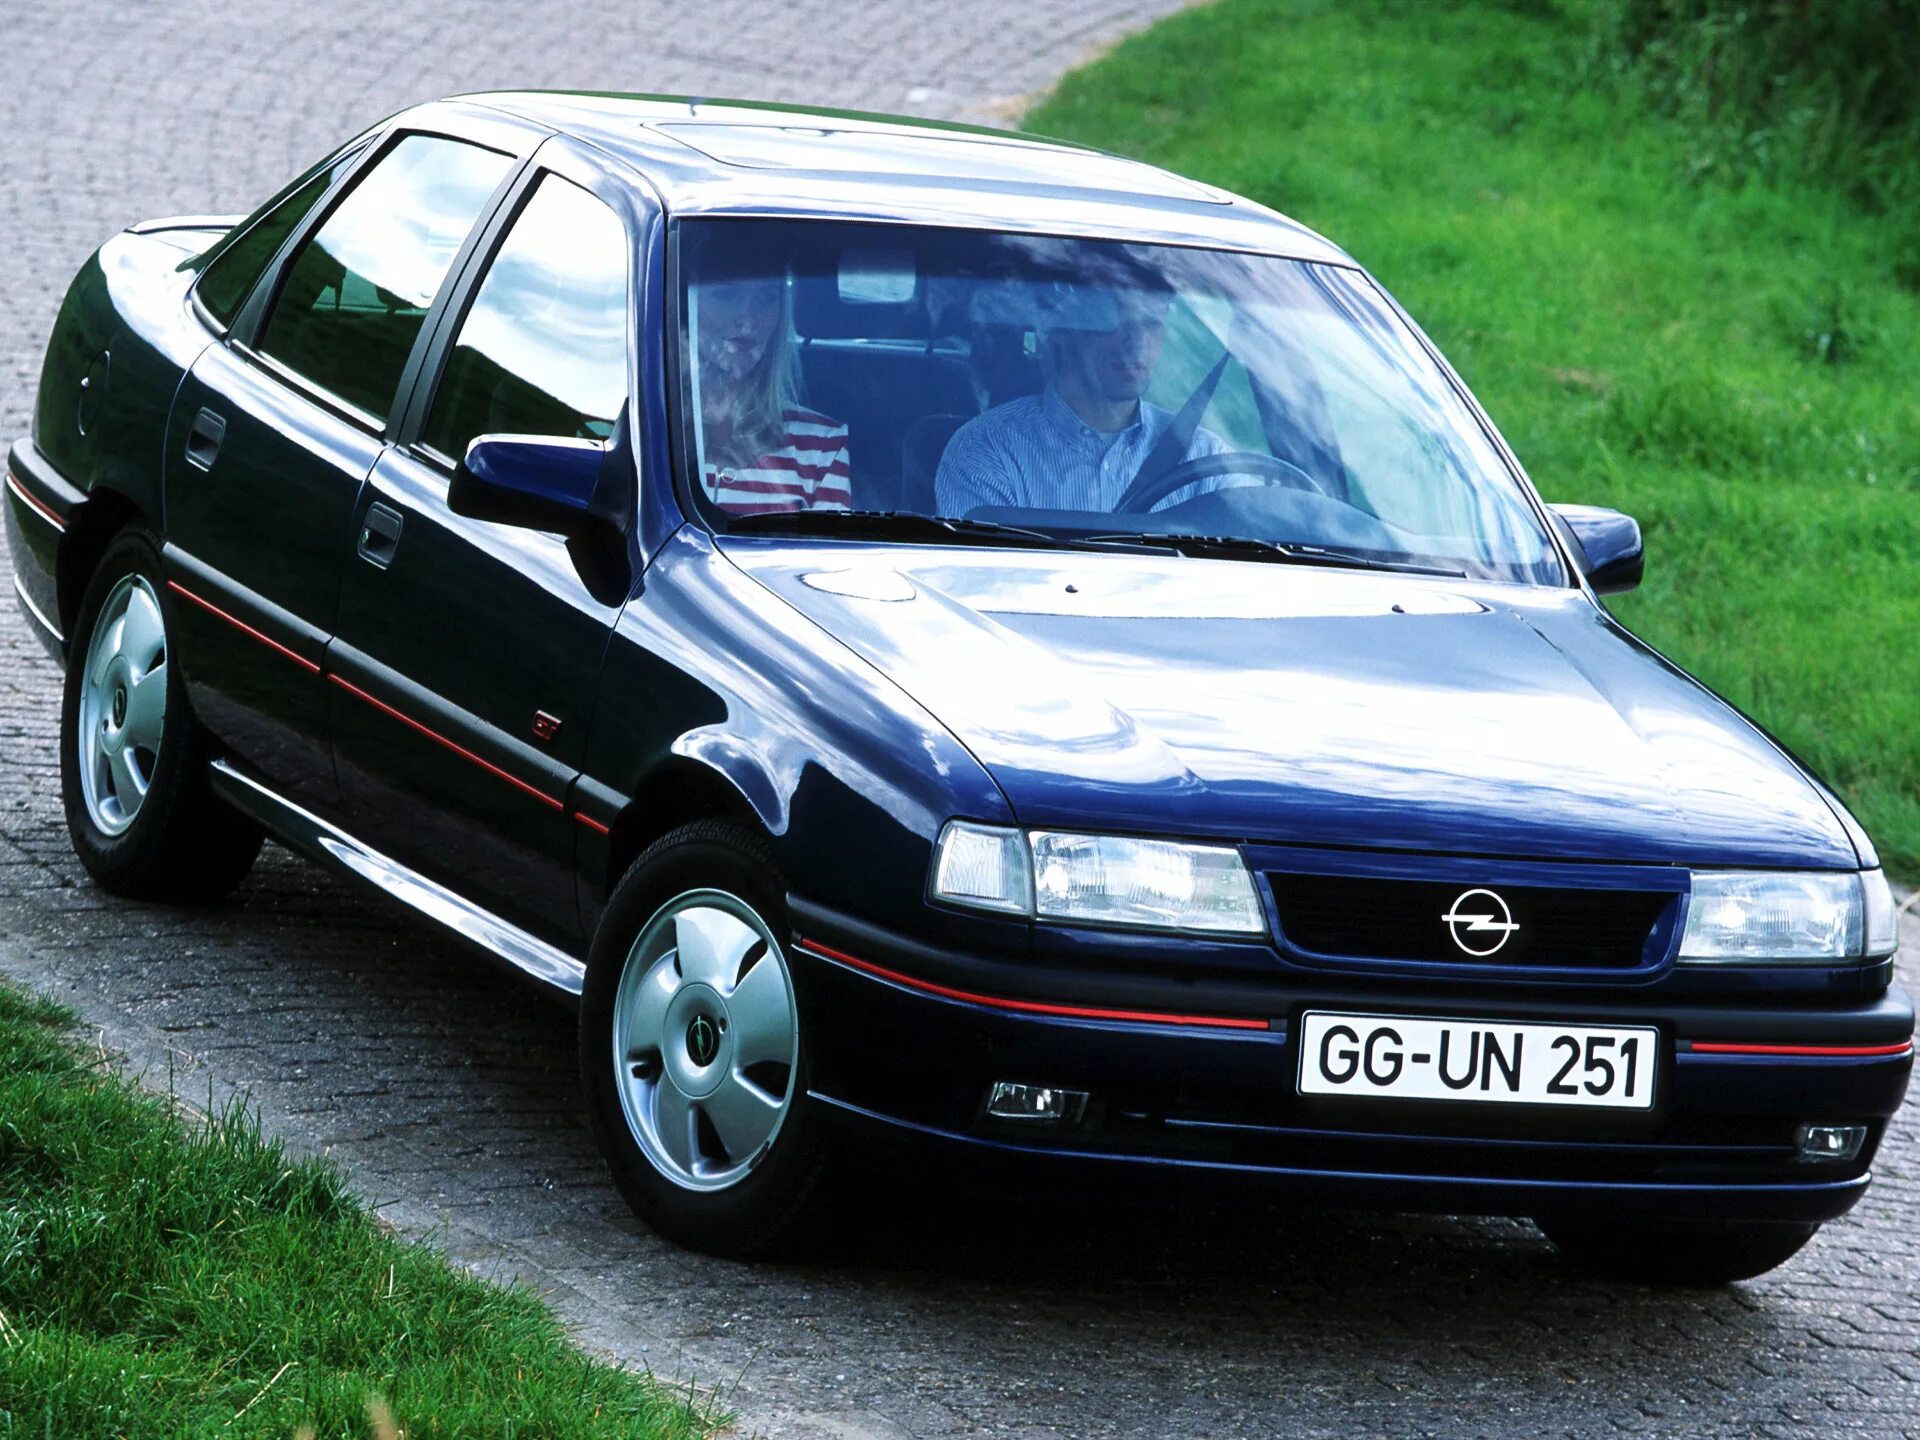 Opel Vectra 1992. Opel Vectra a gt 1995. Опель Вектра 1992. Опель Вектра 1995 седан. Opel 1992